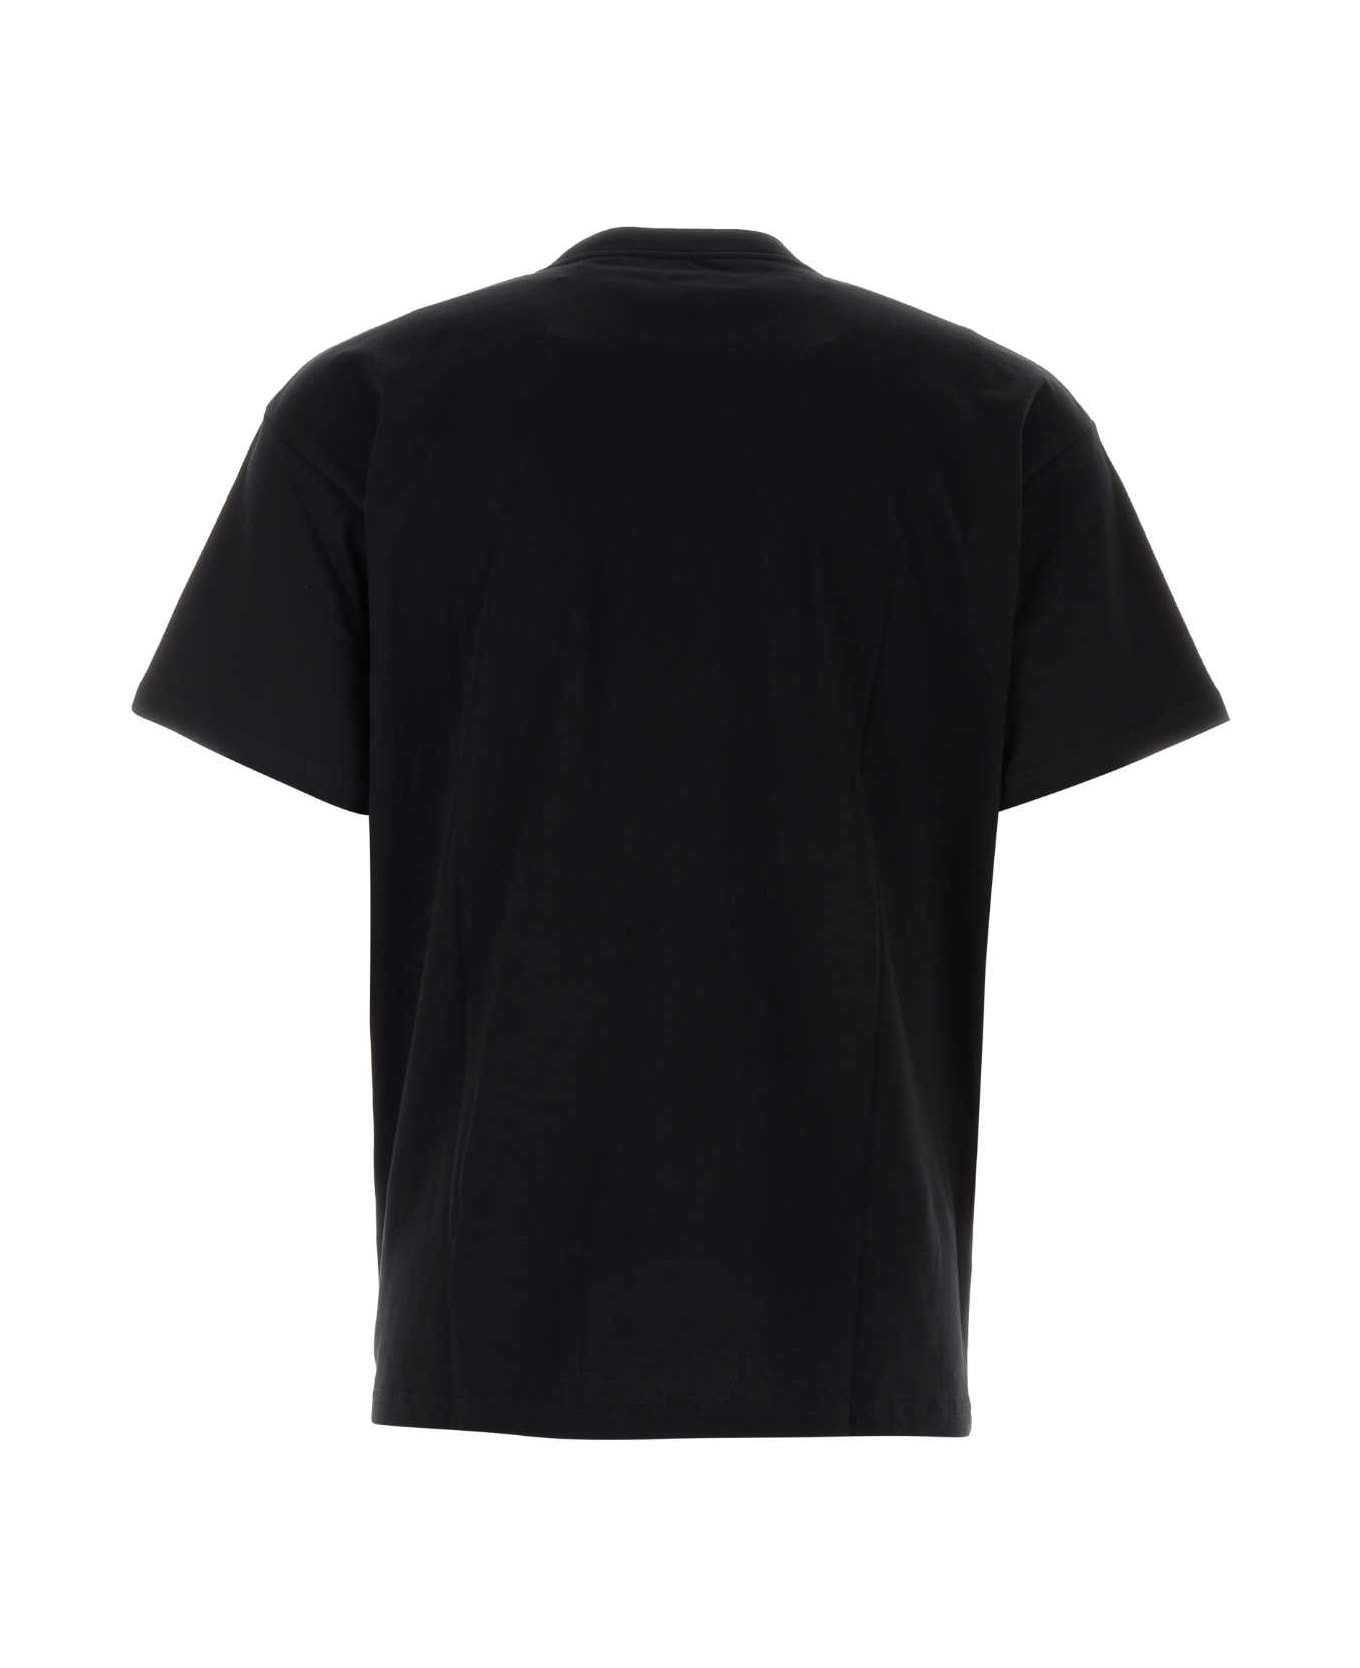 Carhartt Black Cotton S/s Earth Magic T-shirt - BLKRIGID